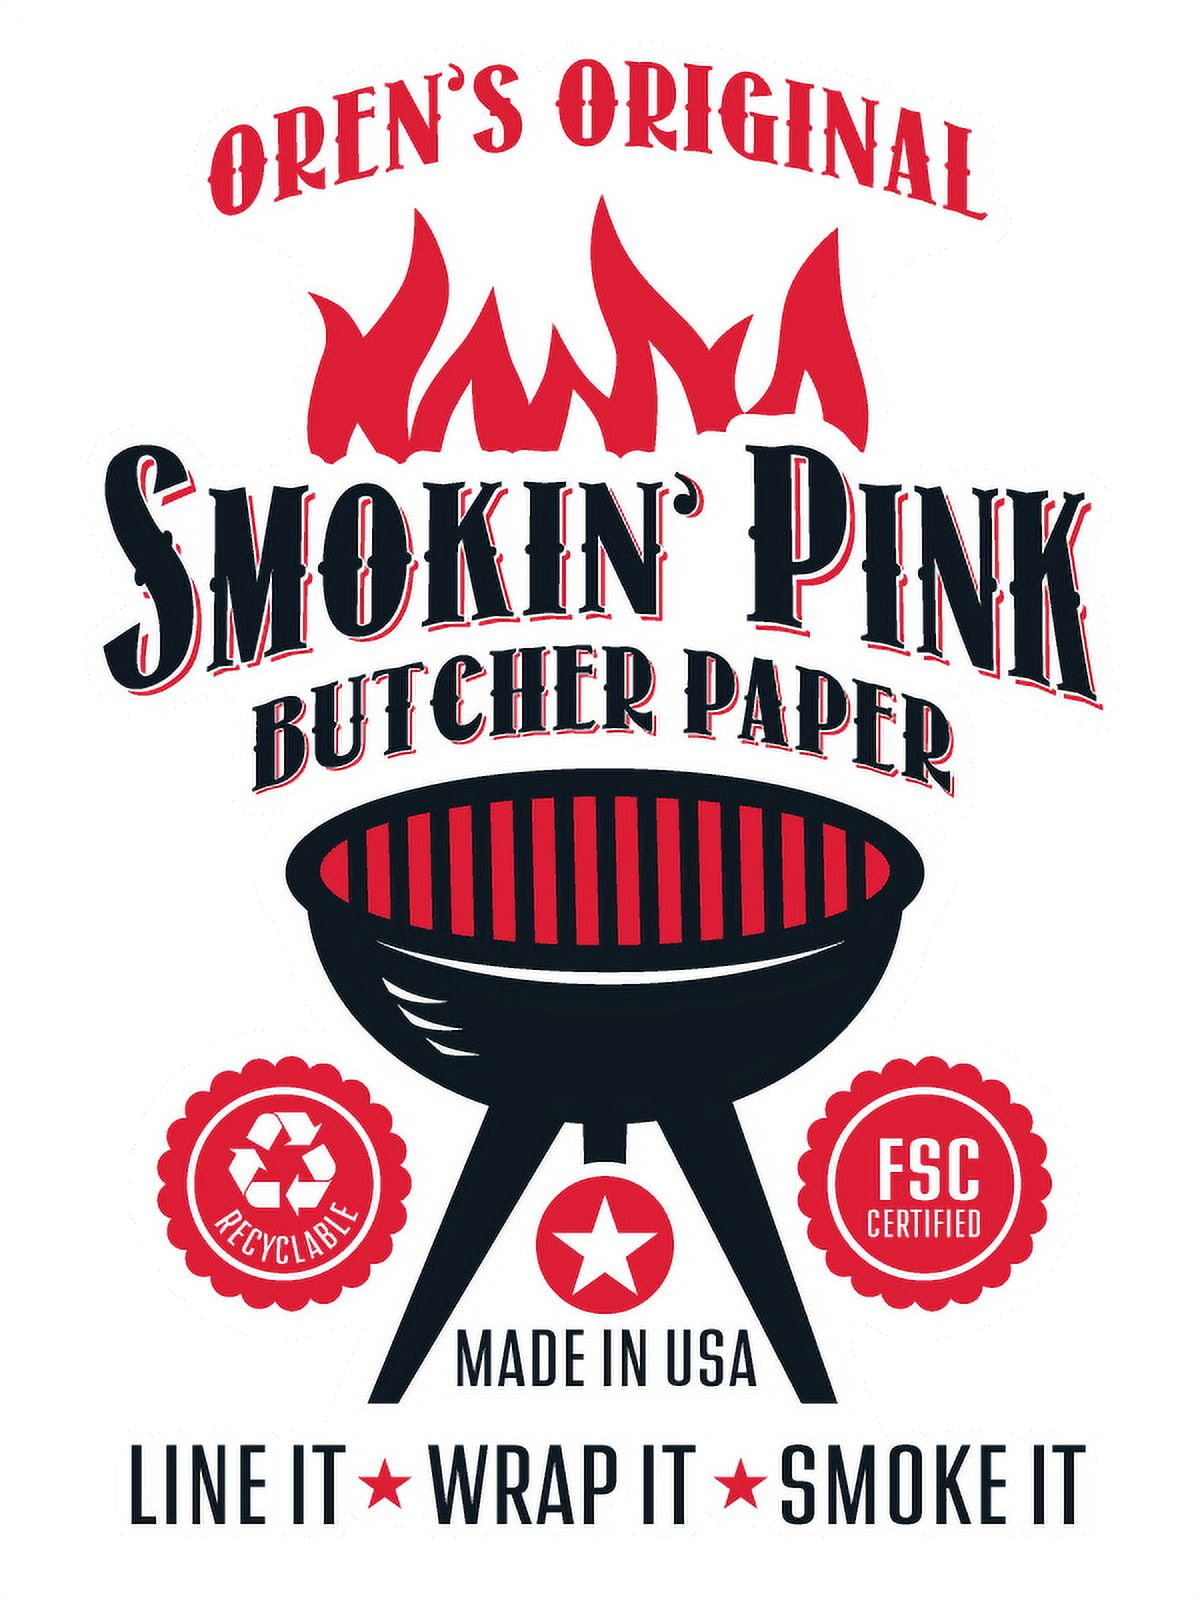 SRF x Oren Pink BBQ Butcher Paper